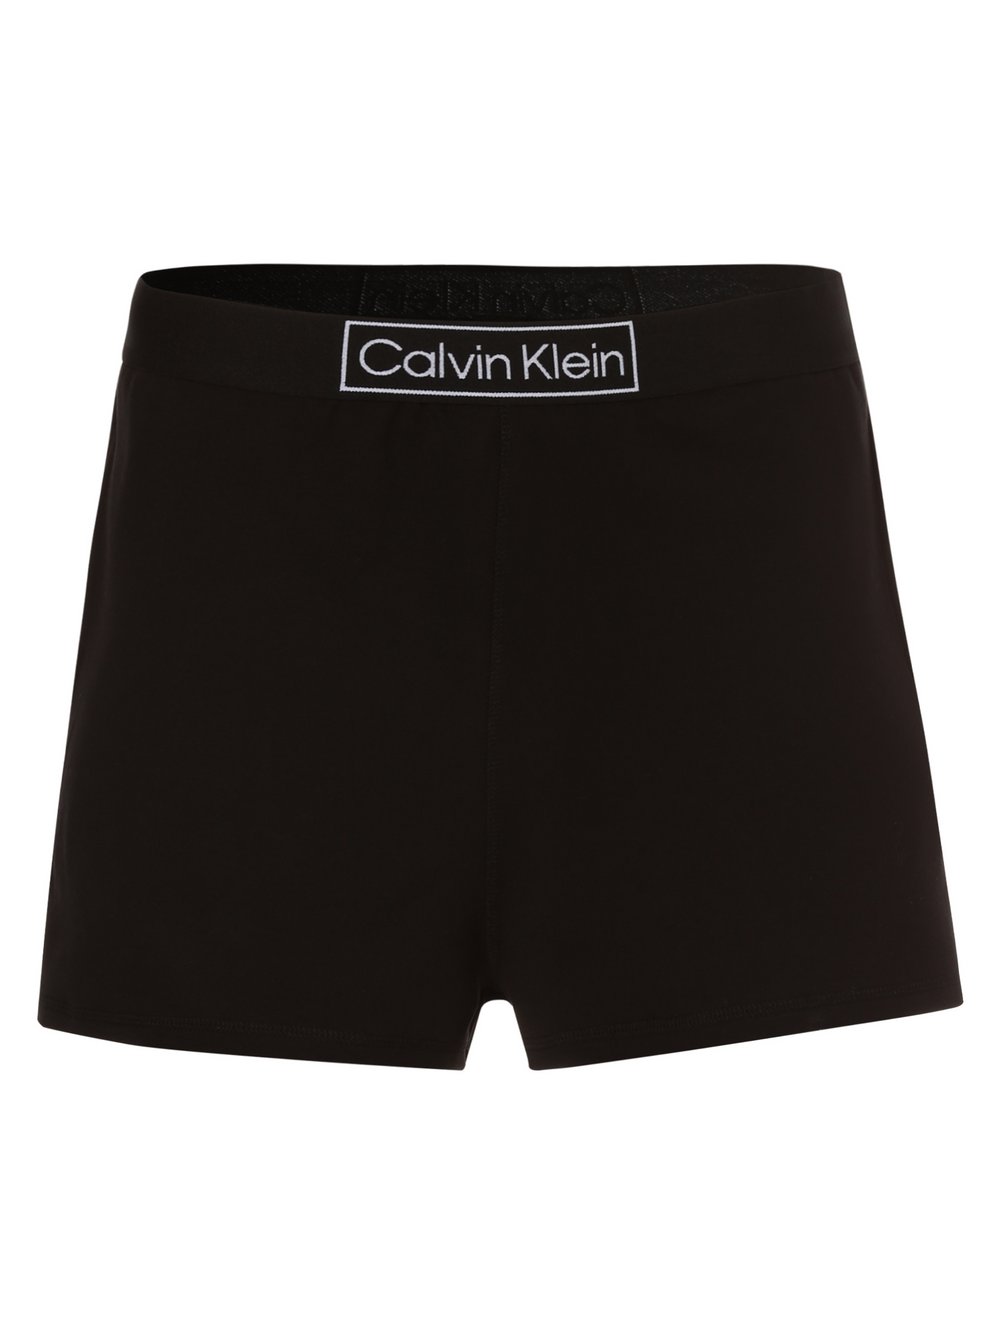 Calvin Klein - Damskie spodenki od piżam, czarny